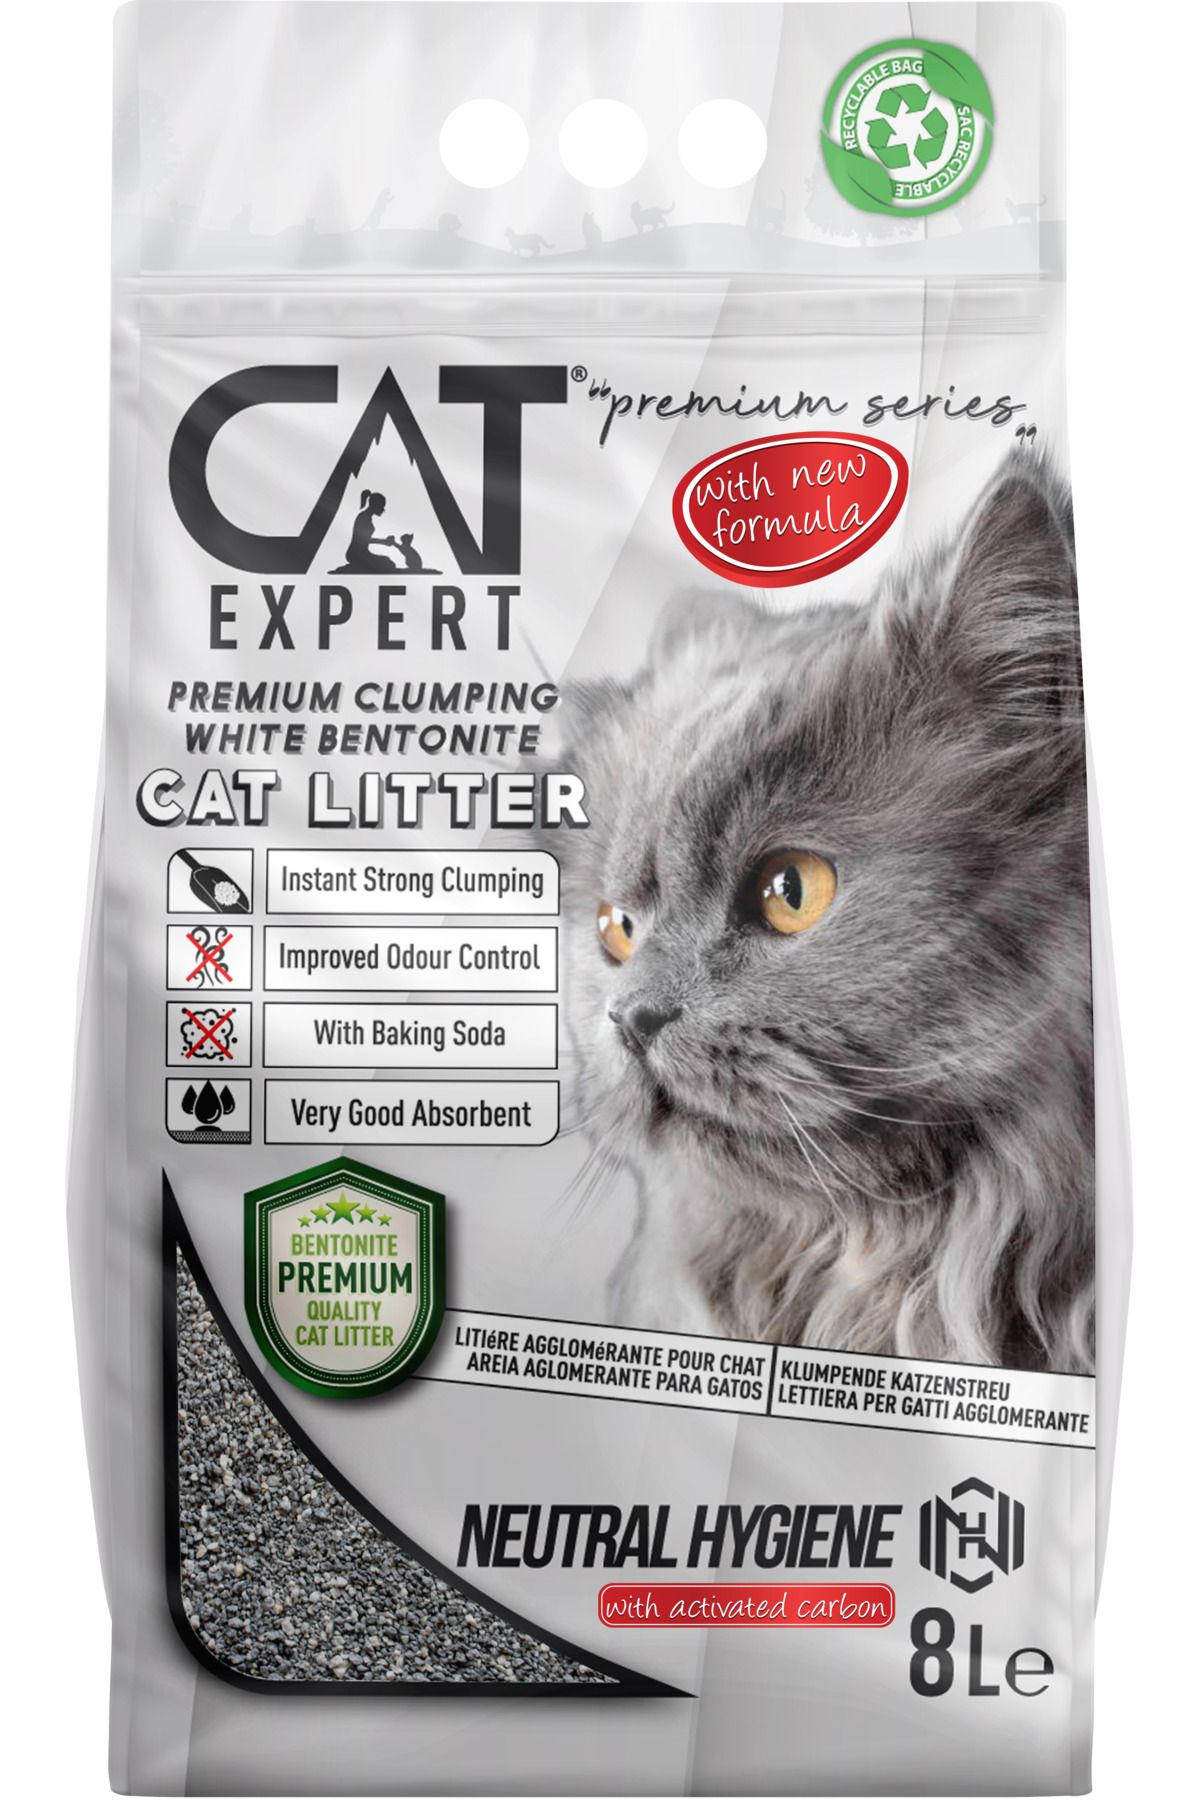 CAT EXPERT Kedi Kumu Neutral Hygiene With Activated Carbon Topaklanan Koku Hapseden Ürün Tozsuz 8 Lt